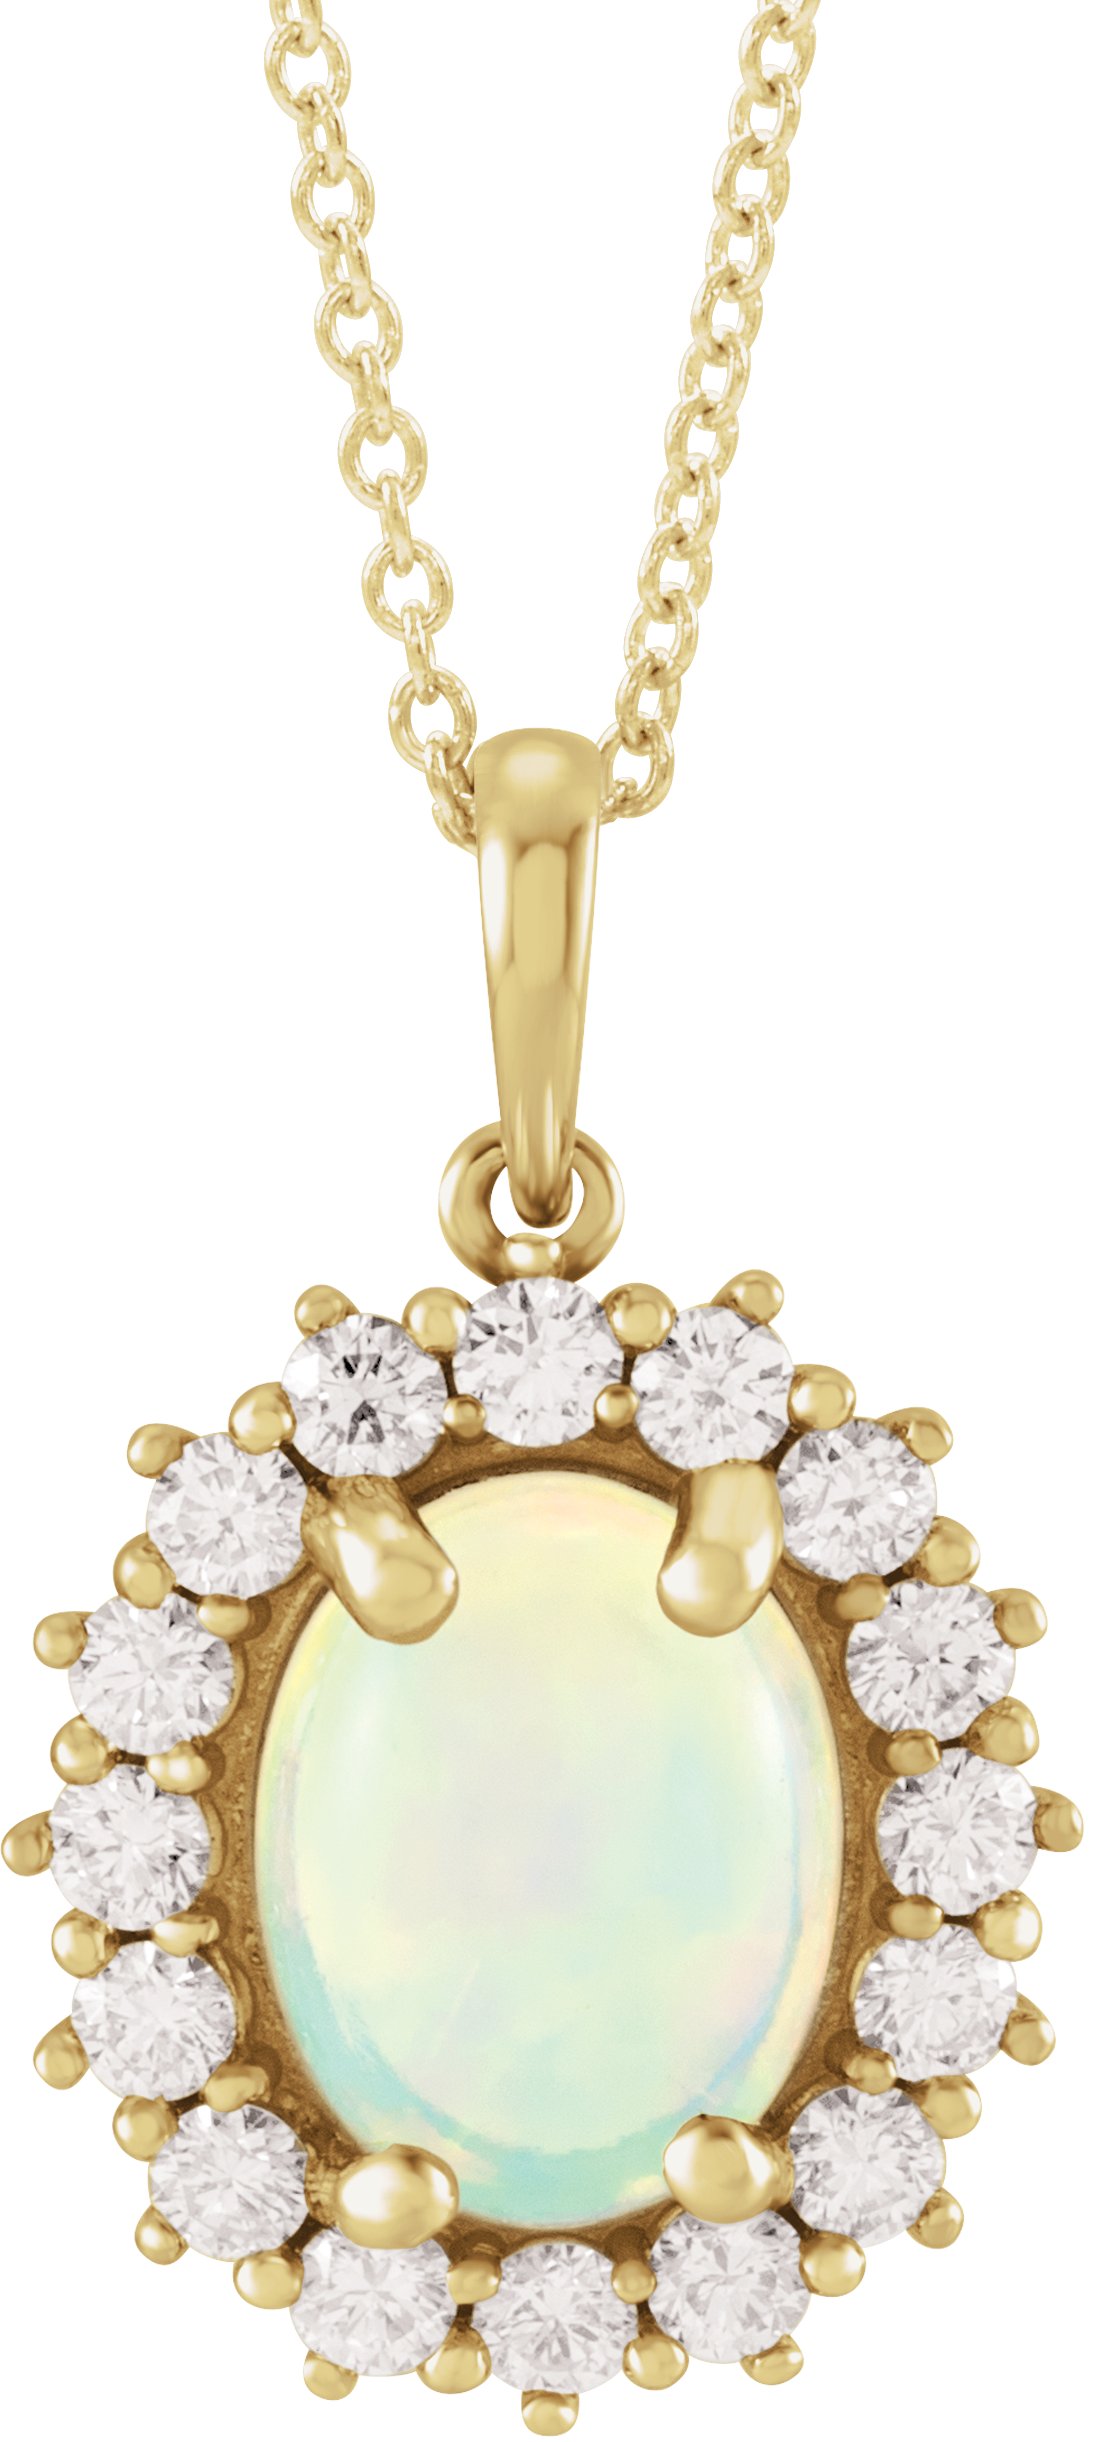 14K Yellow Natural White Ethiopian Opal & 1/3 CTW Natural Diamond Halo-Style 16-18" Necklace